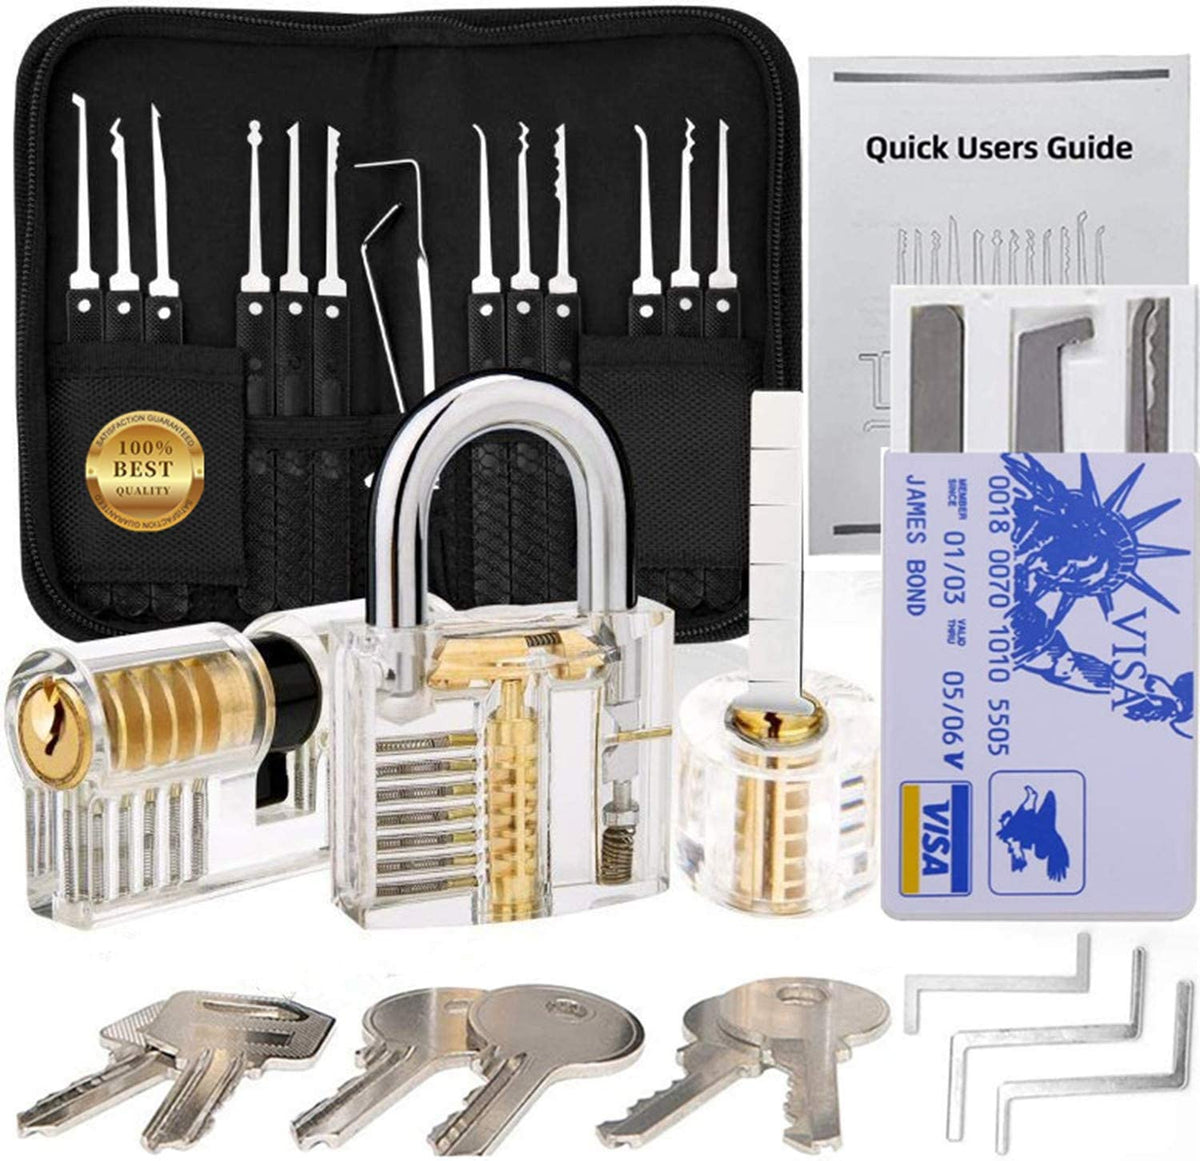 Professional 17-Piece Lock Pick Set with 3 Transparent Padlock LockSmith Tool 1 Credit Card lockpick set